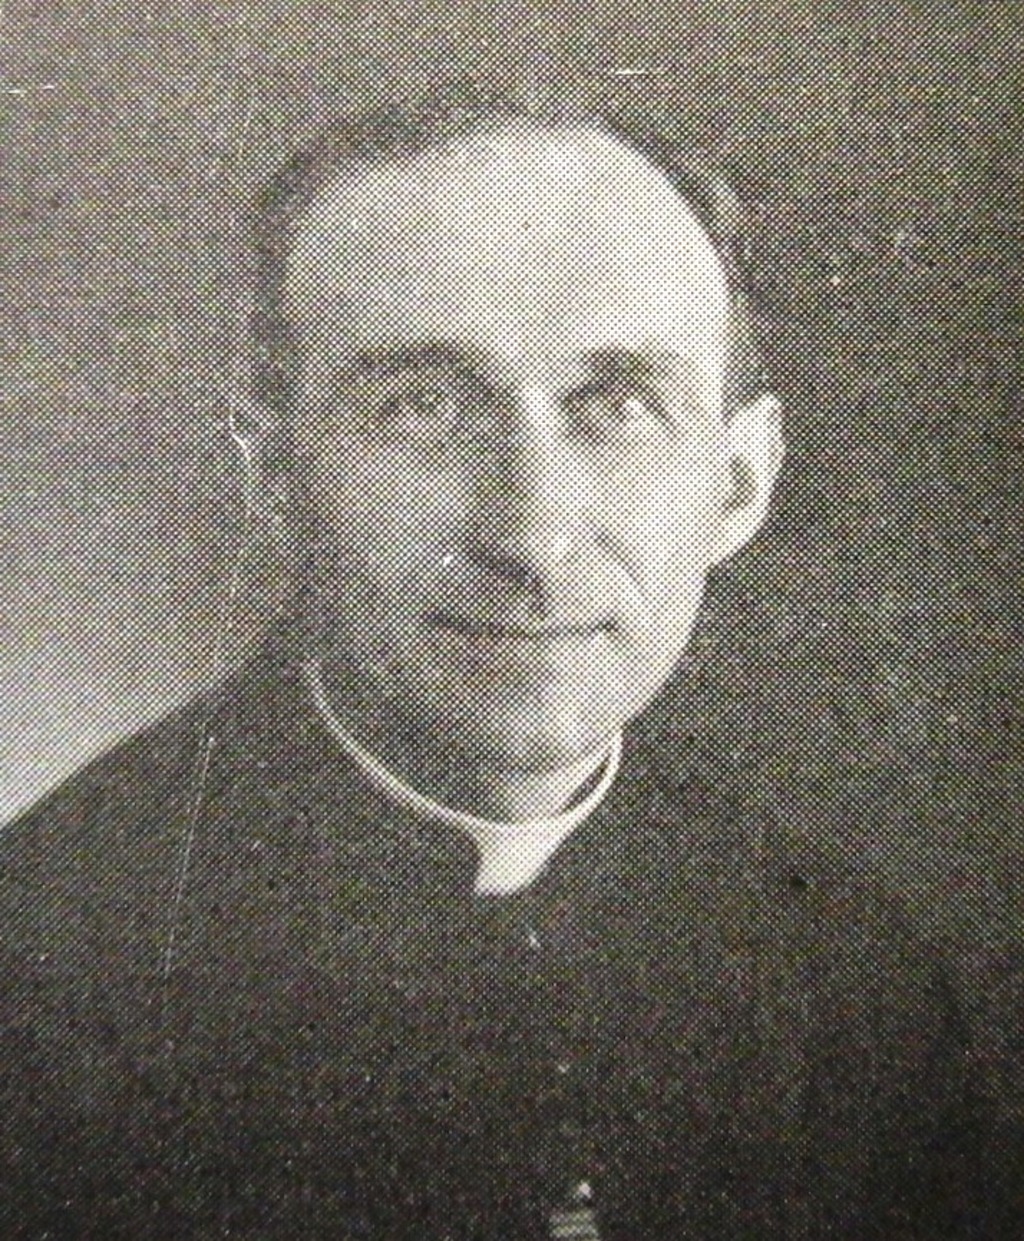 81: Paul Marie Léon Éloi Firket